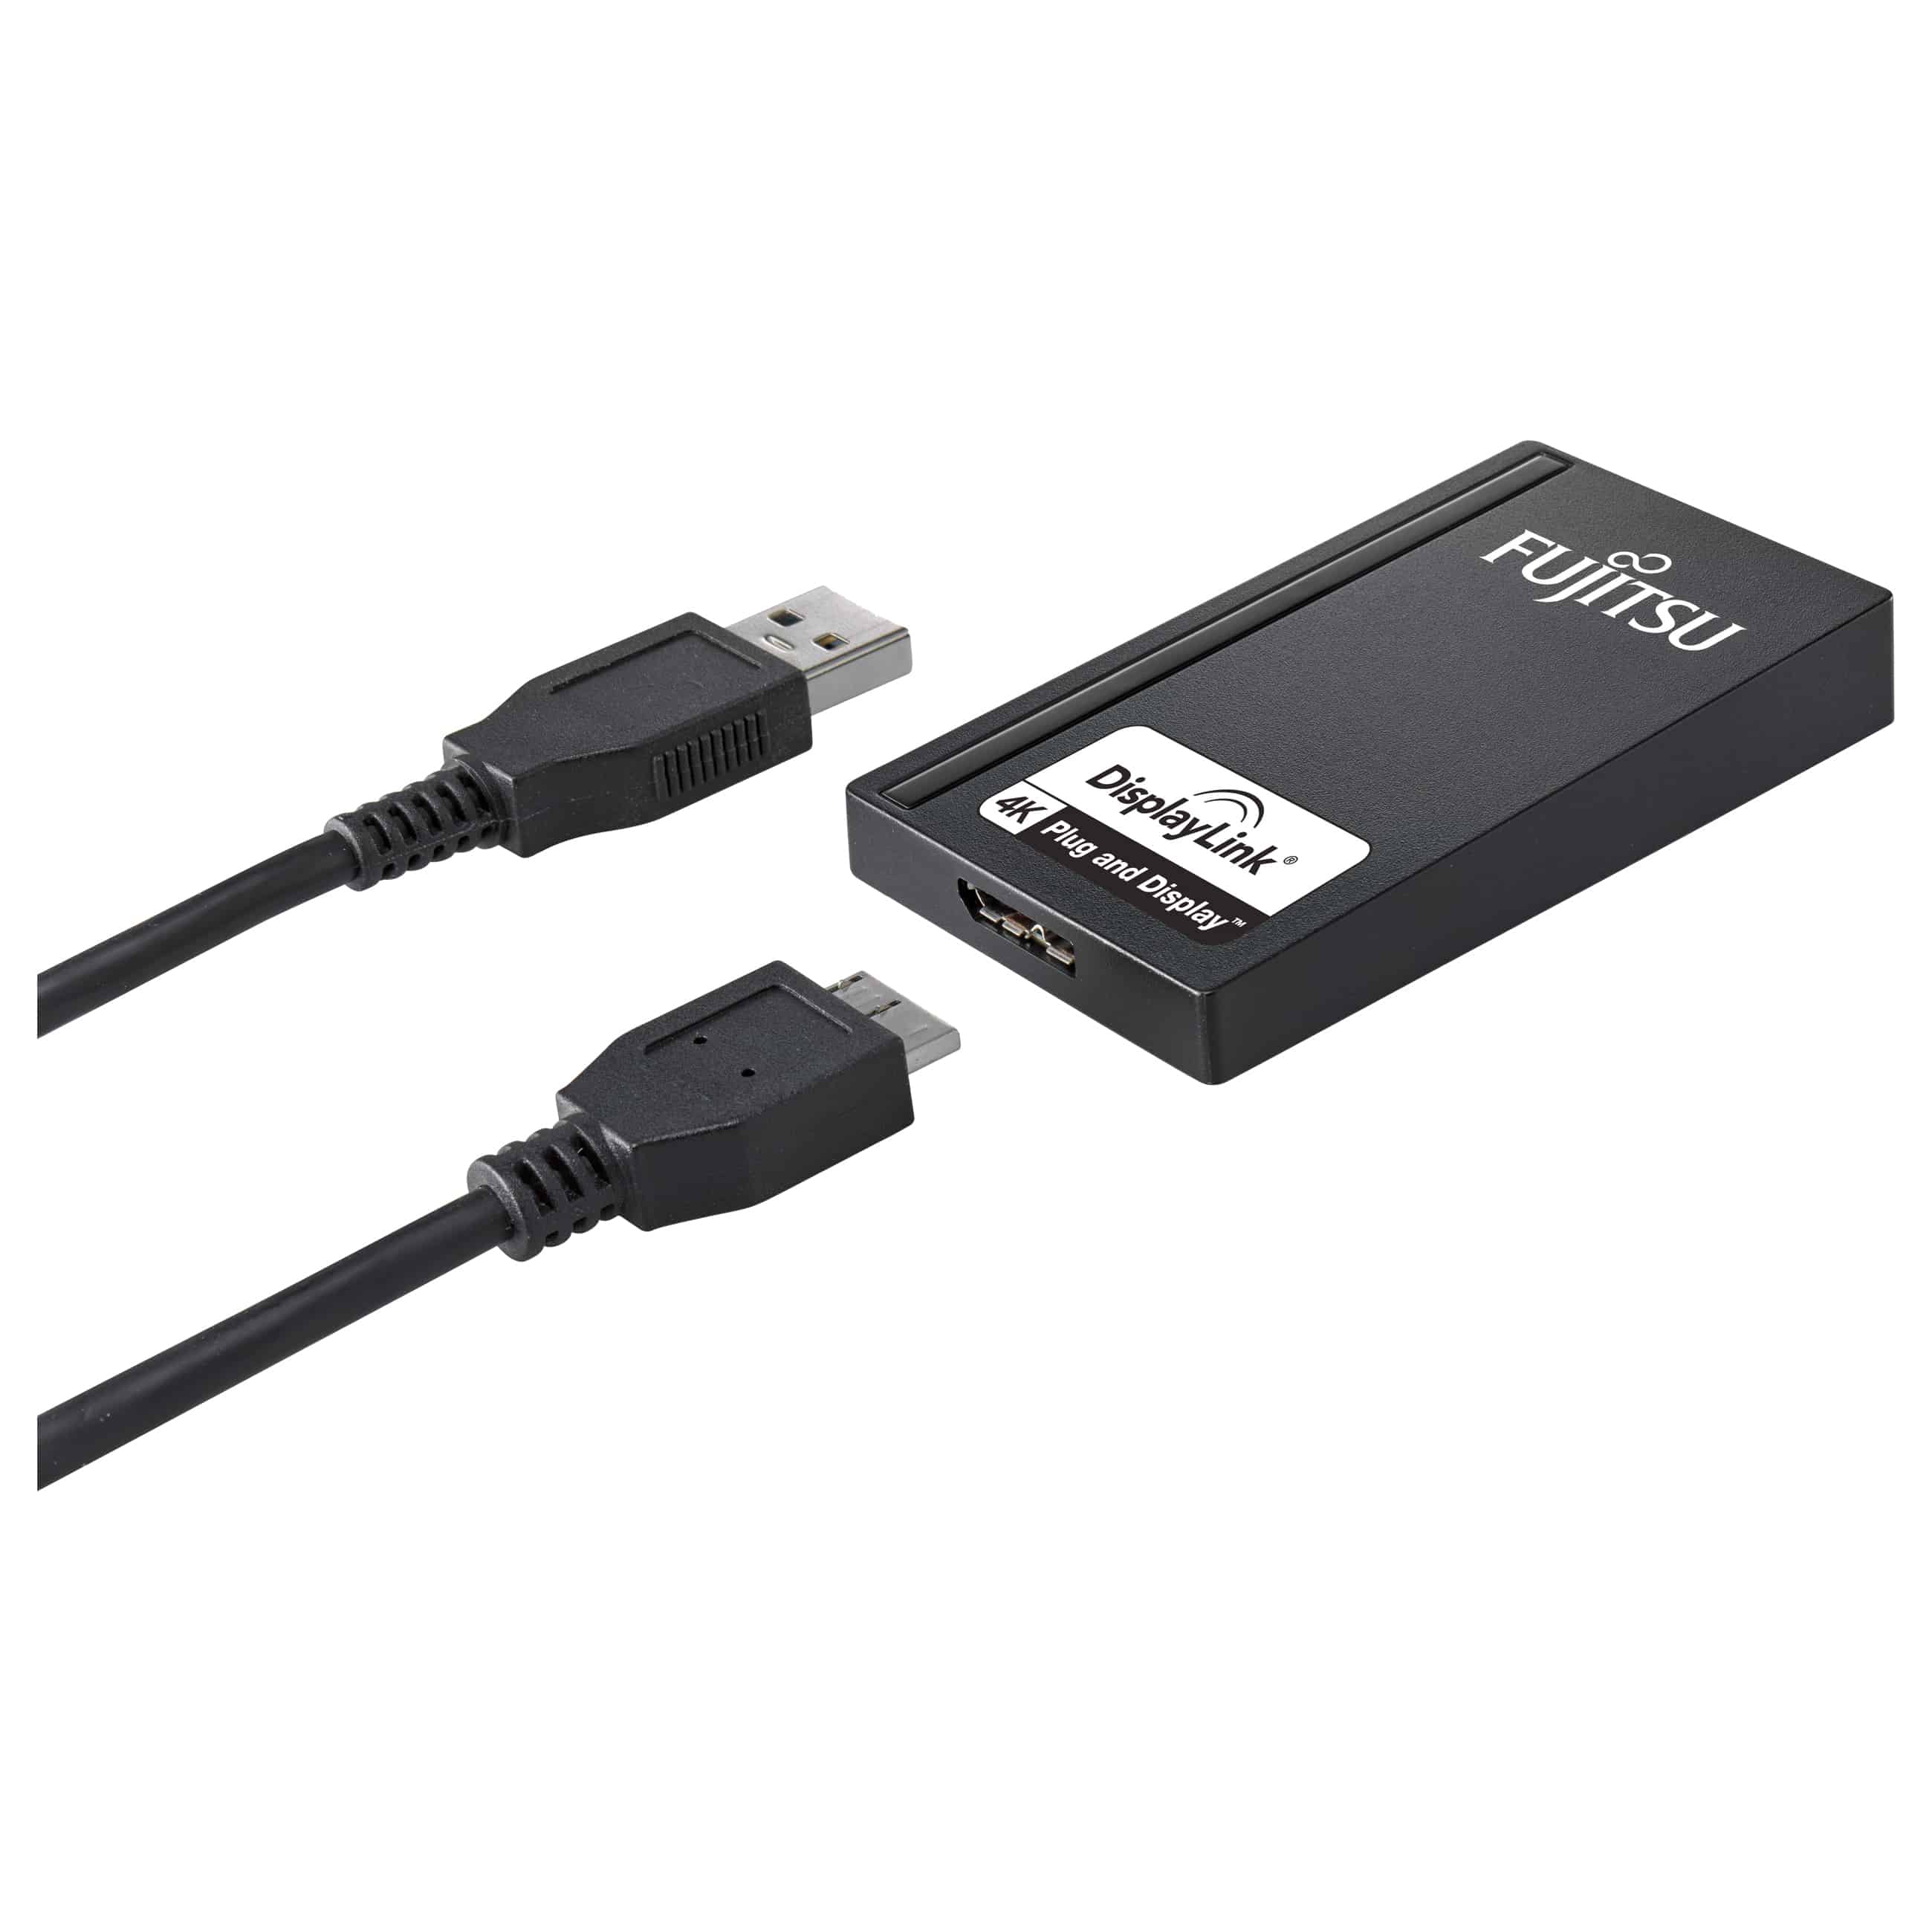 Fujitsu USB 3.0 auf DisplayPort - Video Adapter - Schwarz - Neu